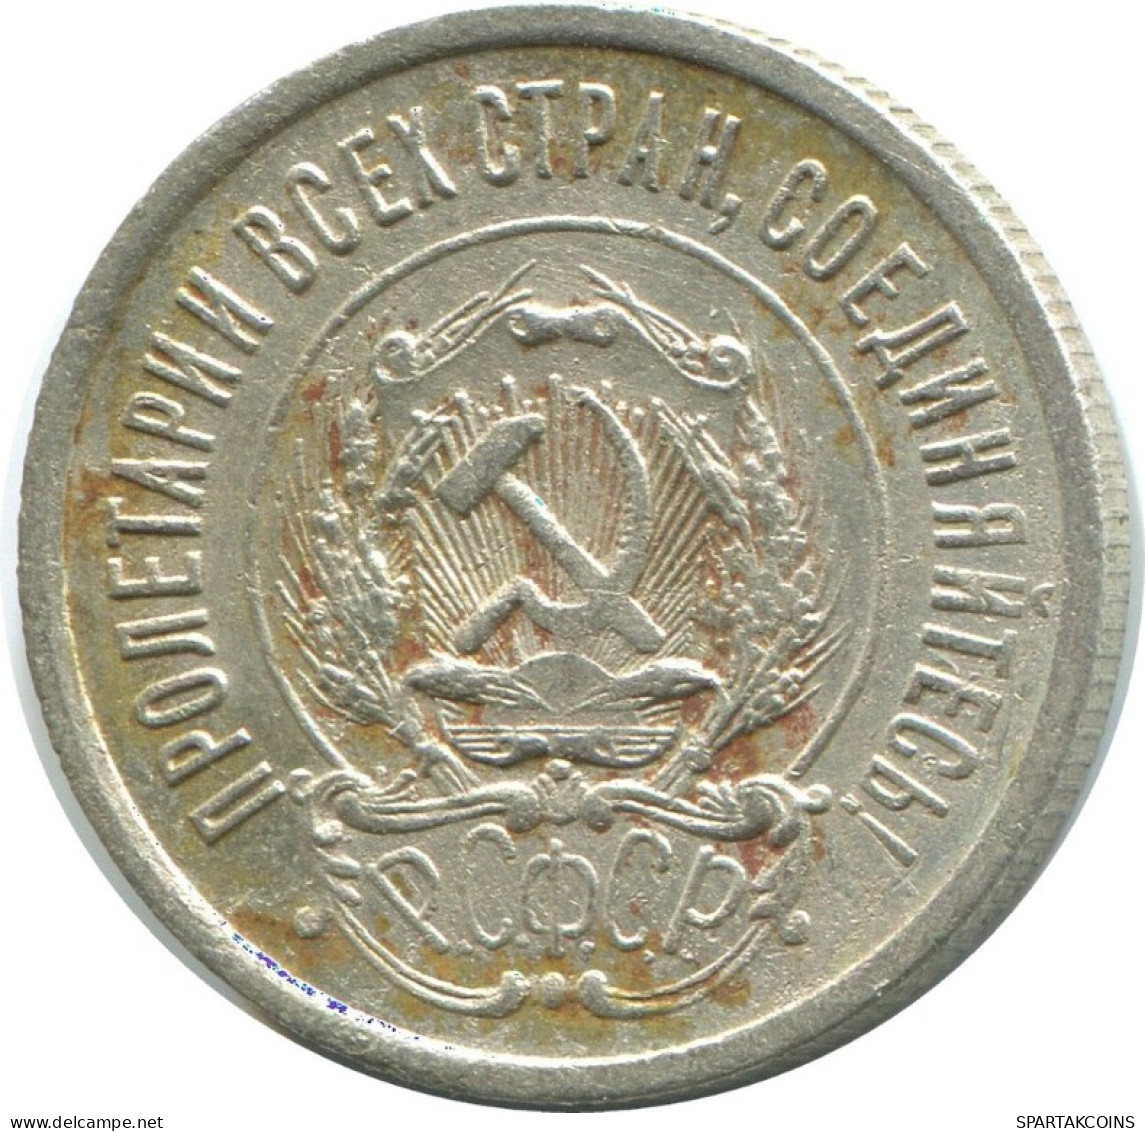 20 KOPEKS 1923 RUSSIA RSFSR SILVER Coin HIGH GRADE #AF649.U.A - Russia